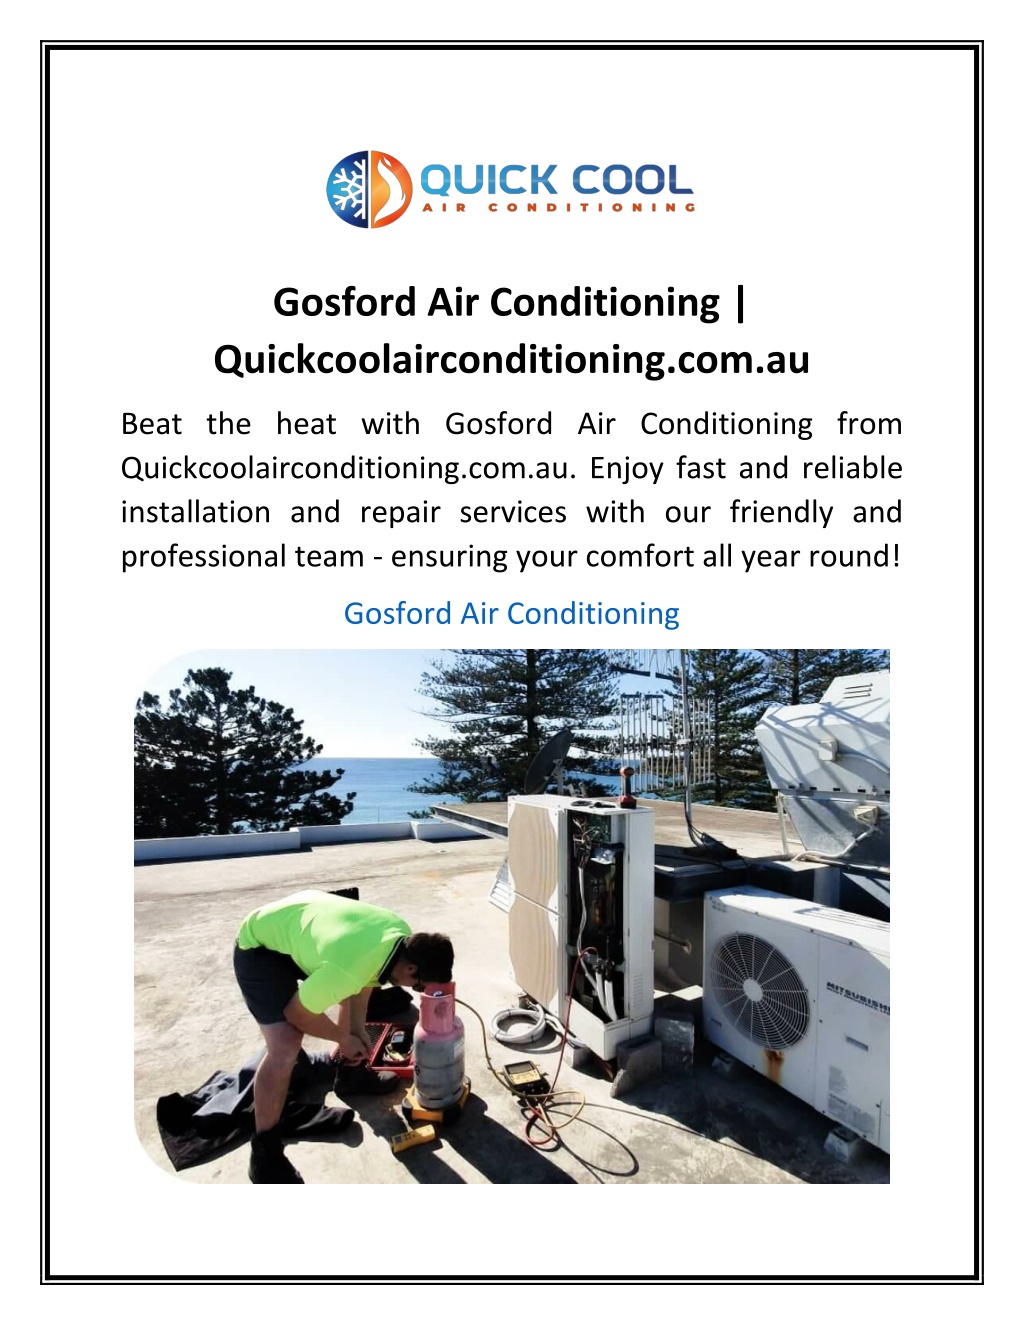 PPT - Gosford Air Conditioning Qui…